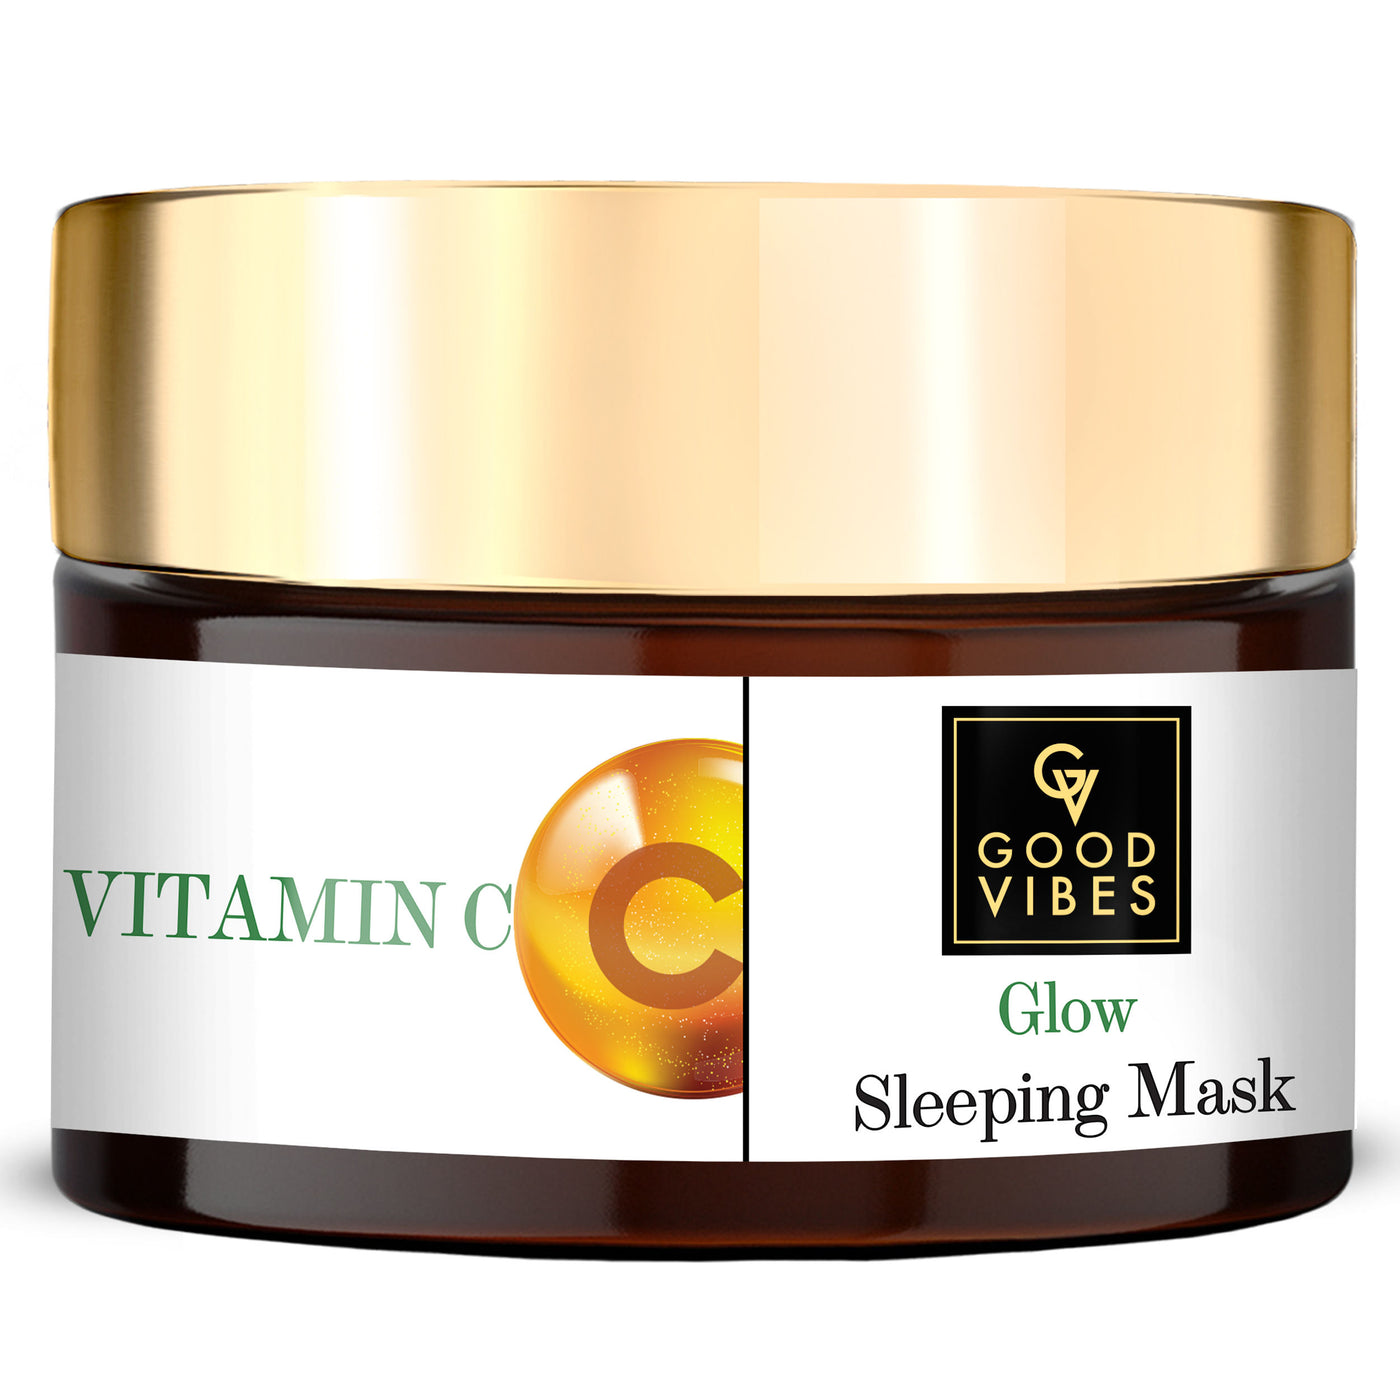 Good Vibes Vitamin C Glow Sleeping Mask (50 gm) - 1